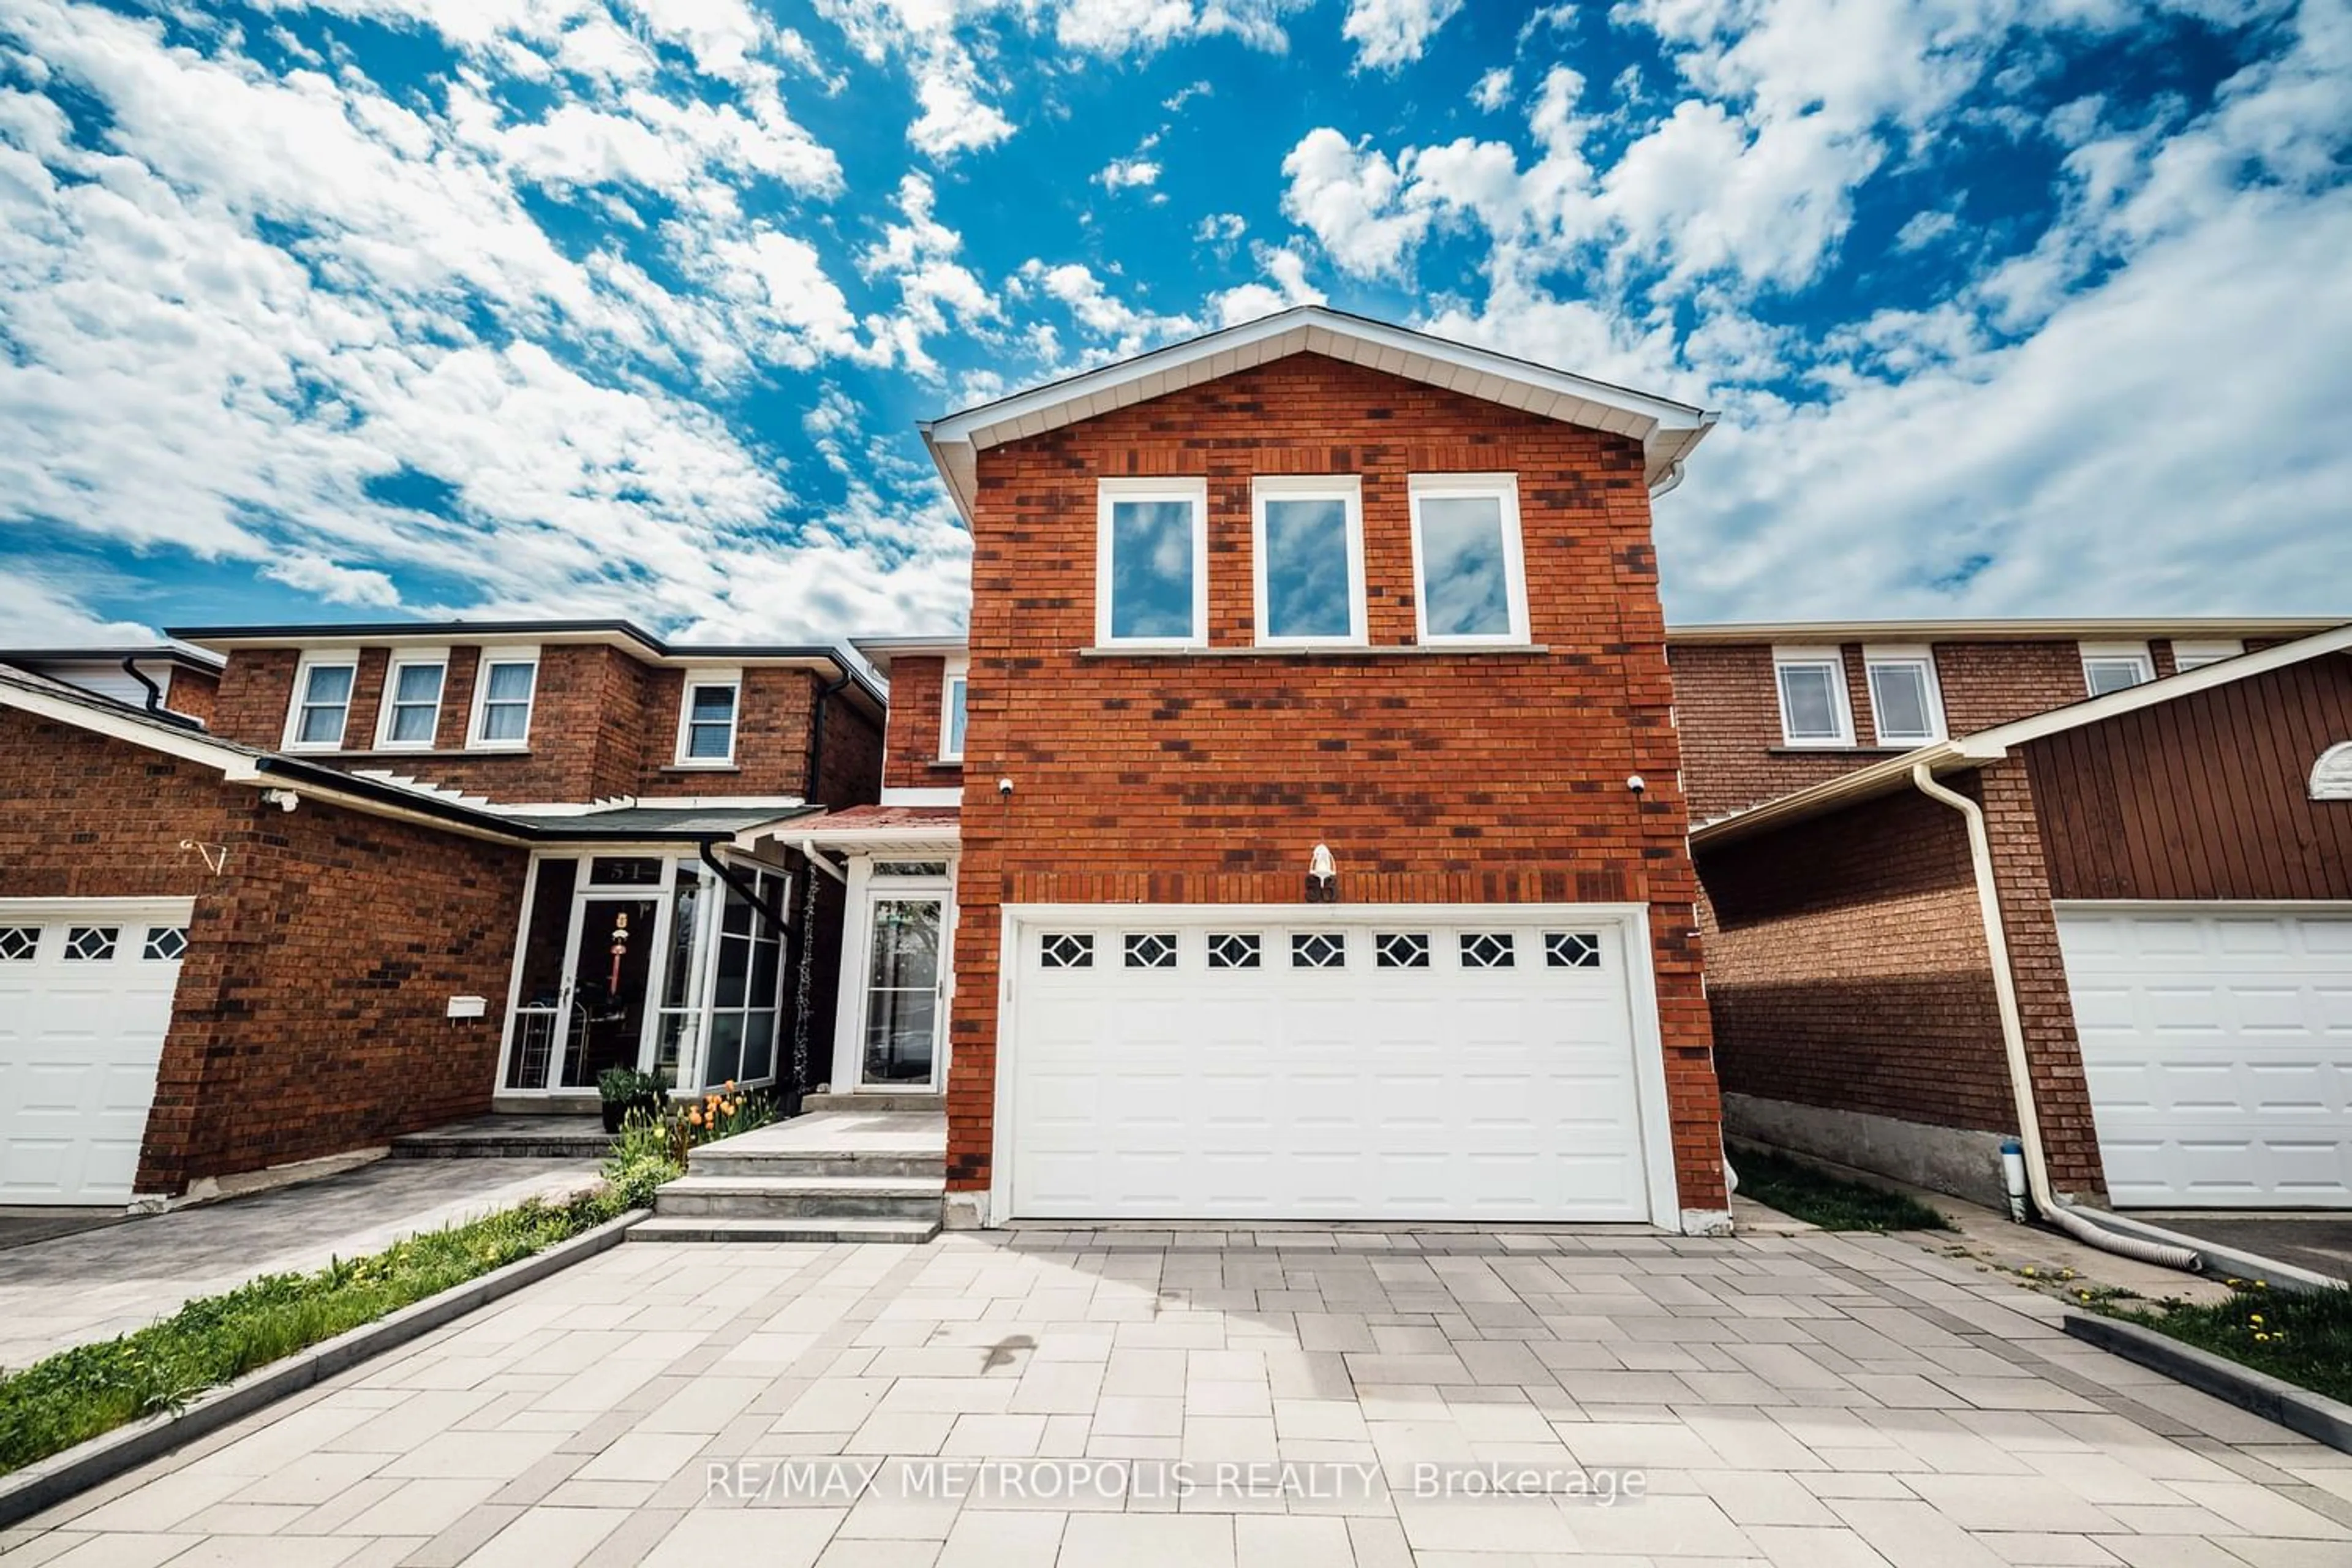 Home with brick exterior material for 53 Alanbull Sq, Toronto Ontario M1V 4M2